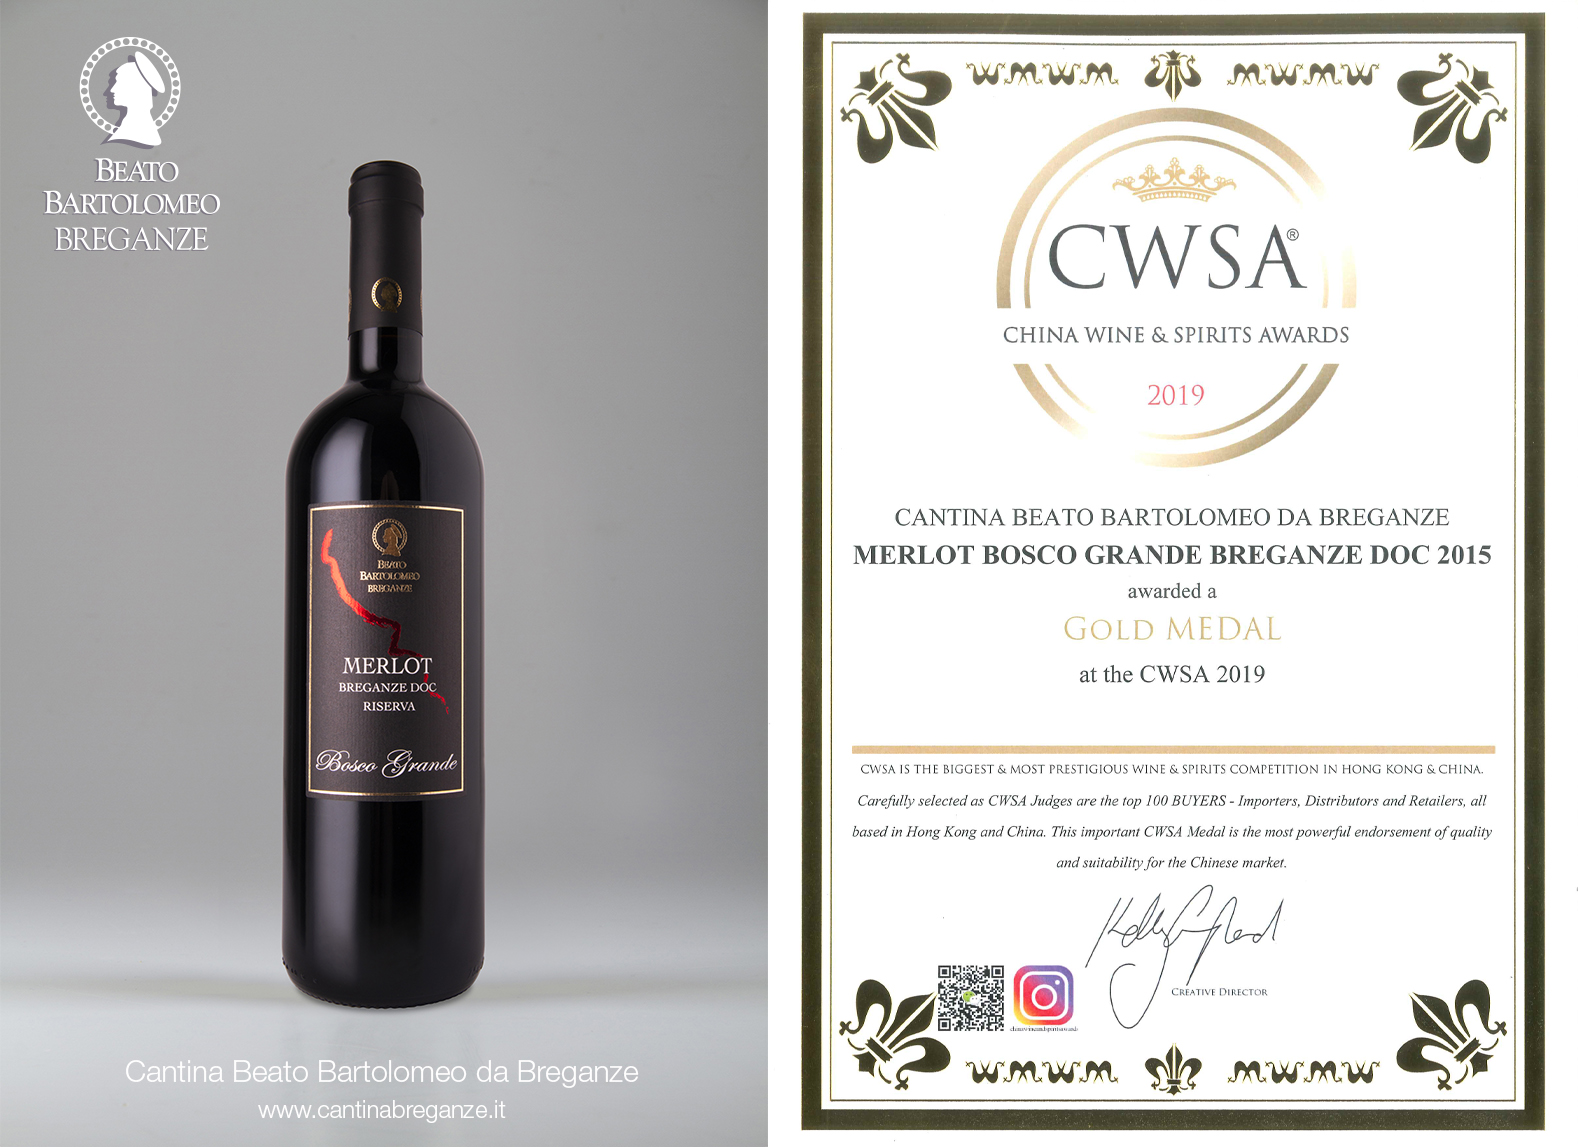 CWSA China Wine & Spirits Awards 2019